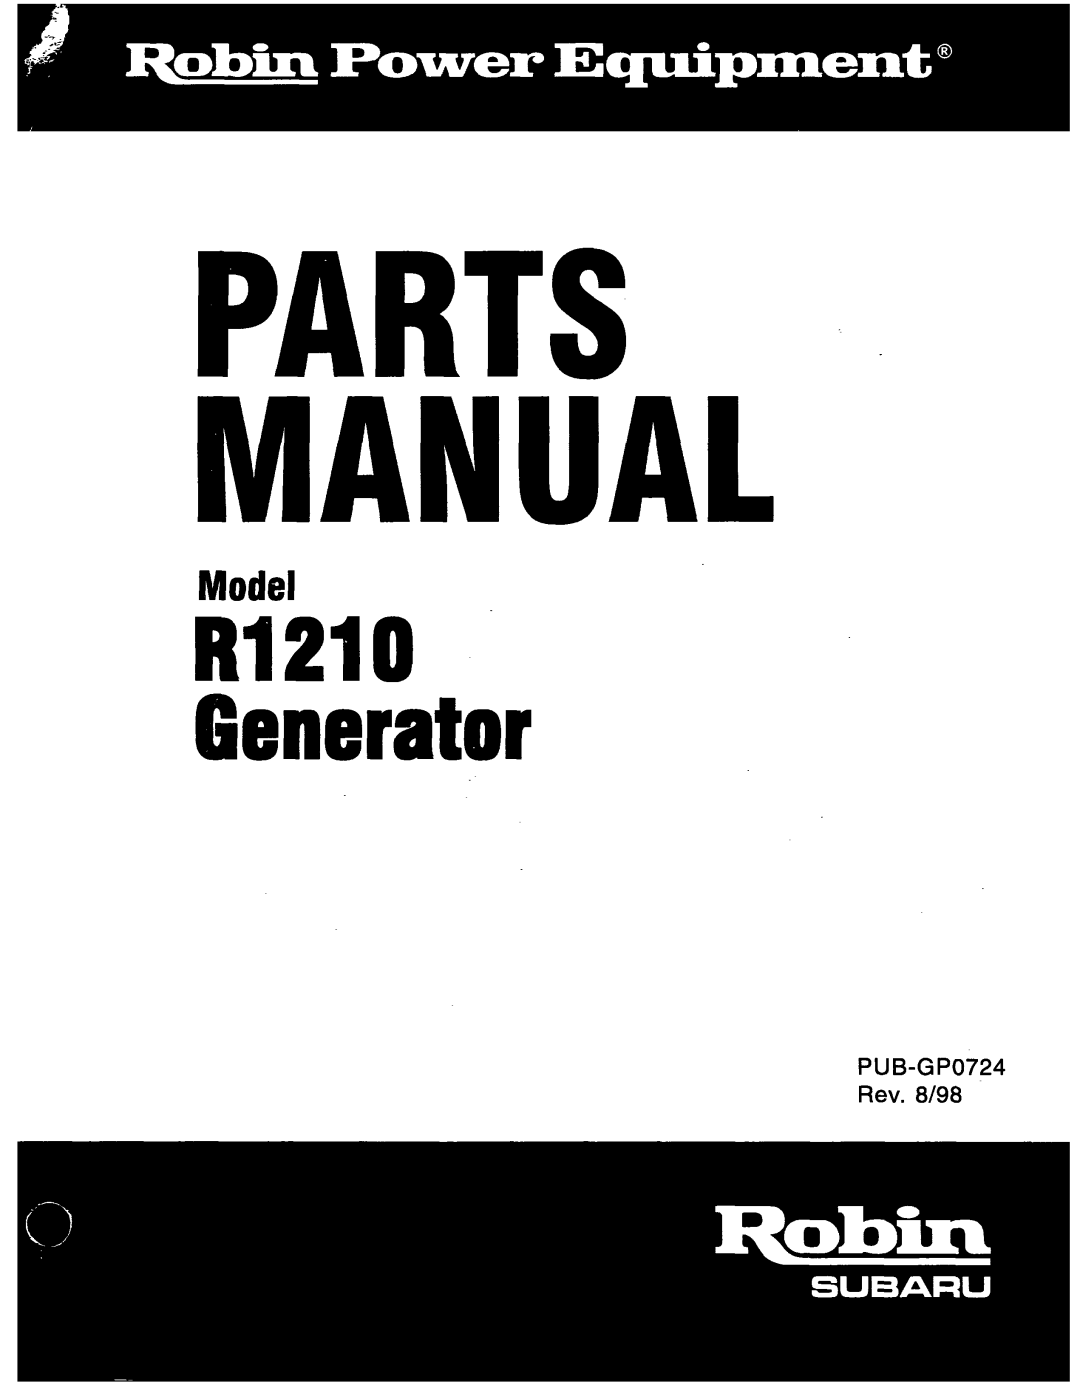 Subaru Robin Power Products R1210 manual PUB-GPO724 Rev. 8/98, Parts Manual, Generator, Model 